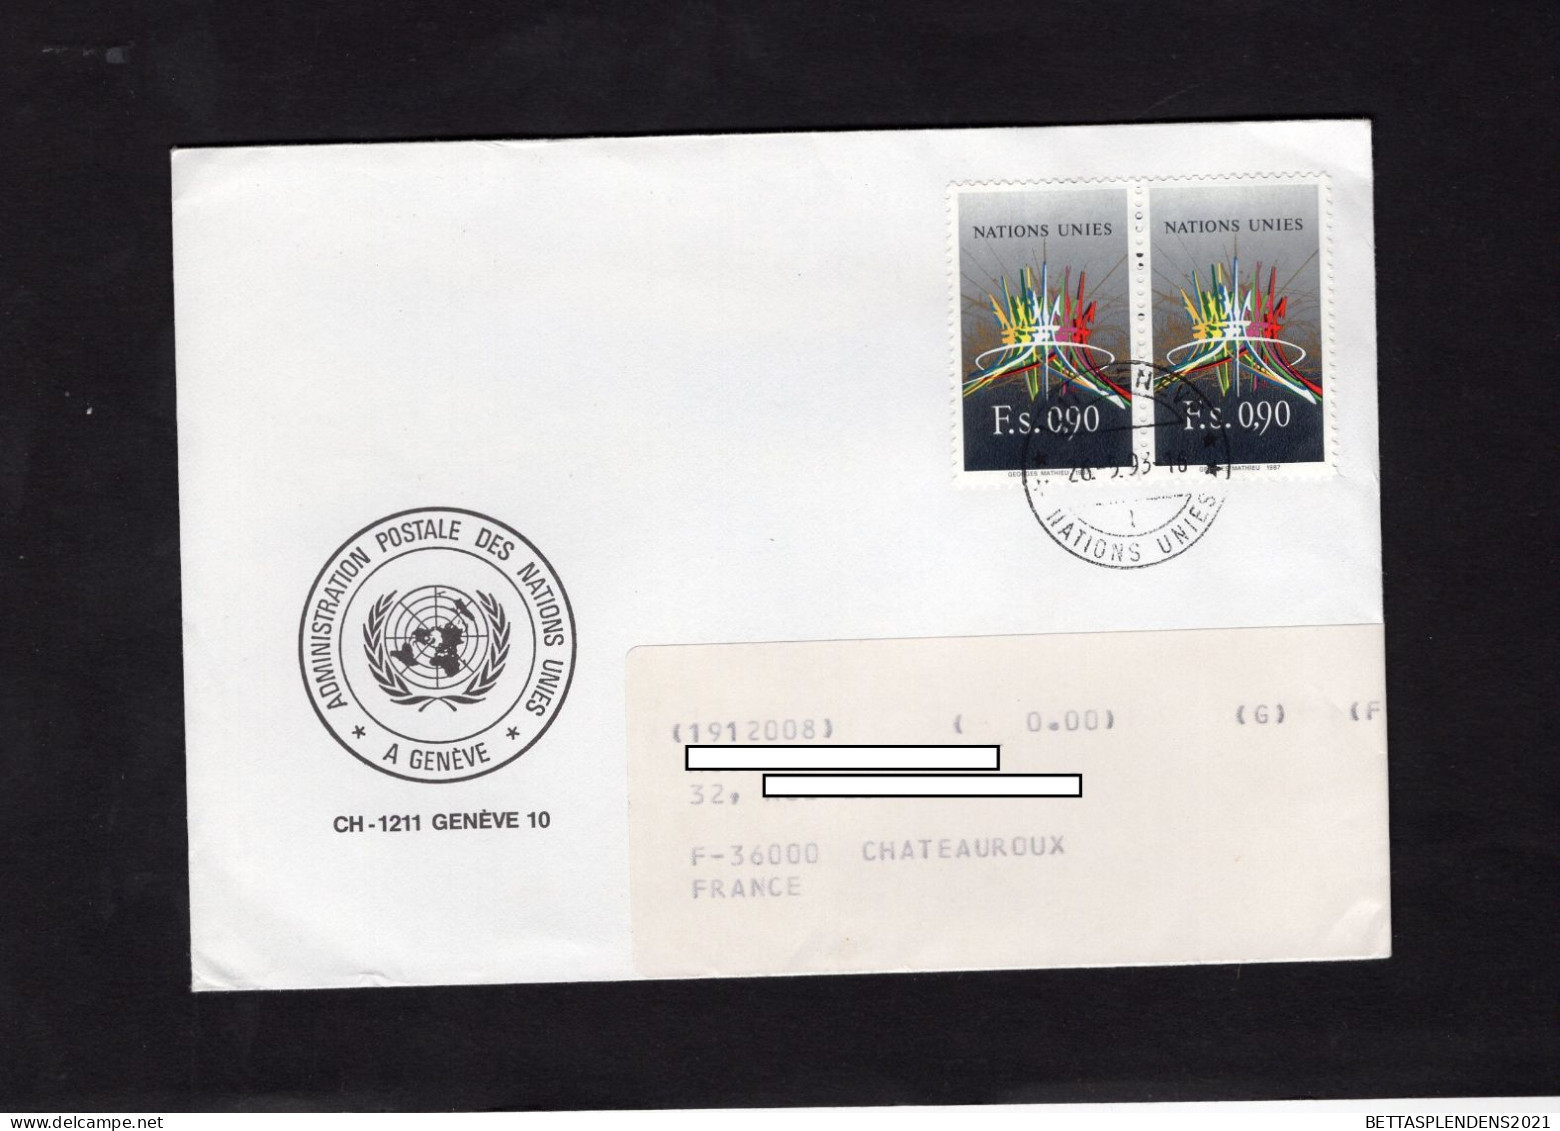 LSC 1993 - Administration Postale Des Nations Unies à GENEVE - YT 152 (x2) - Covers & Documents